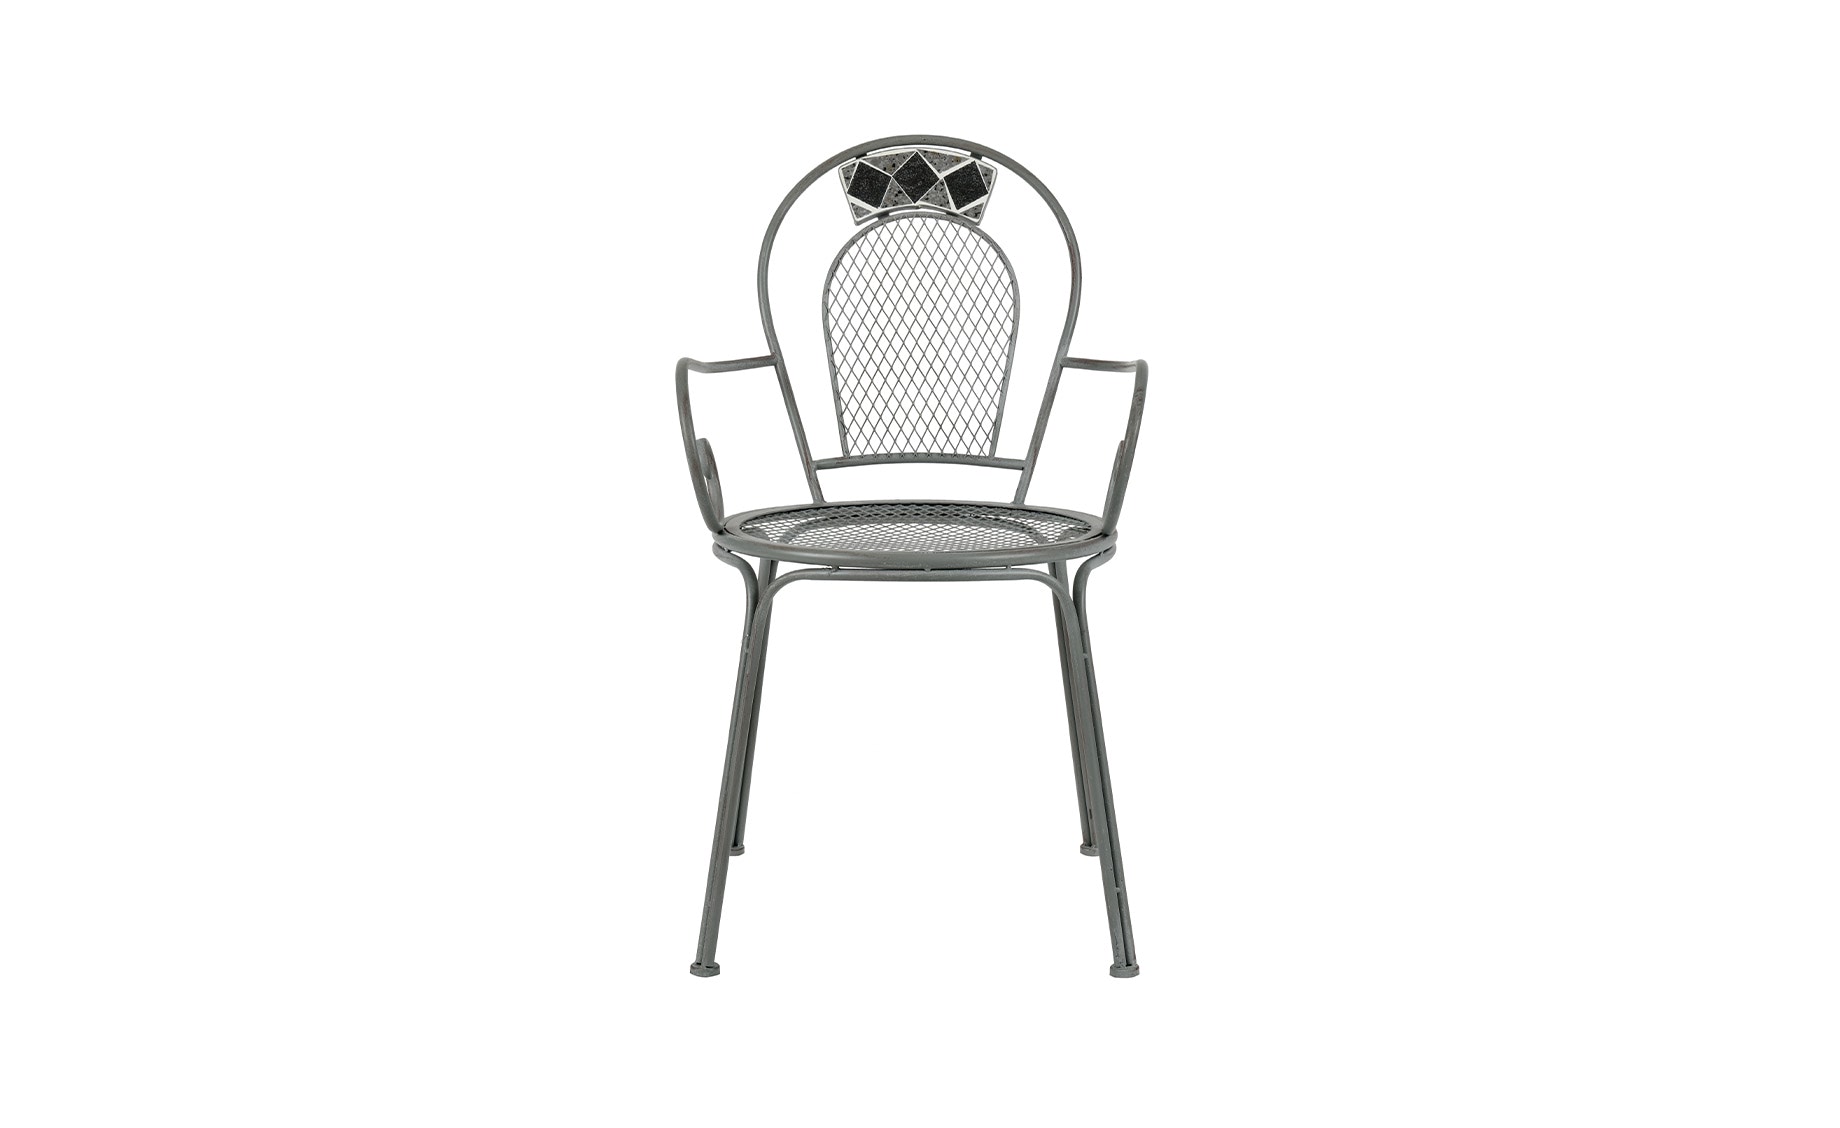 Bolero stolica sa rukonaslonima 52x58x88 cm sivi metal